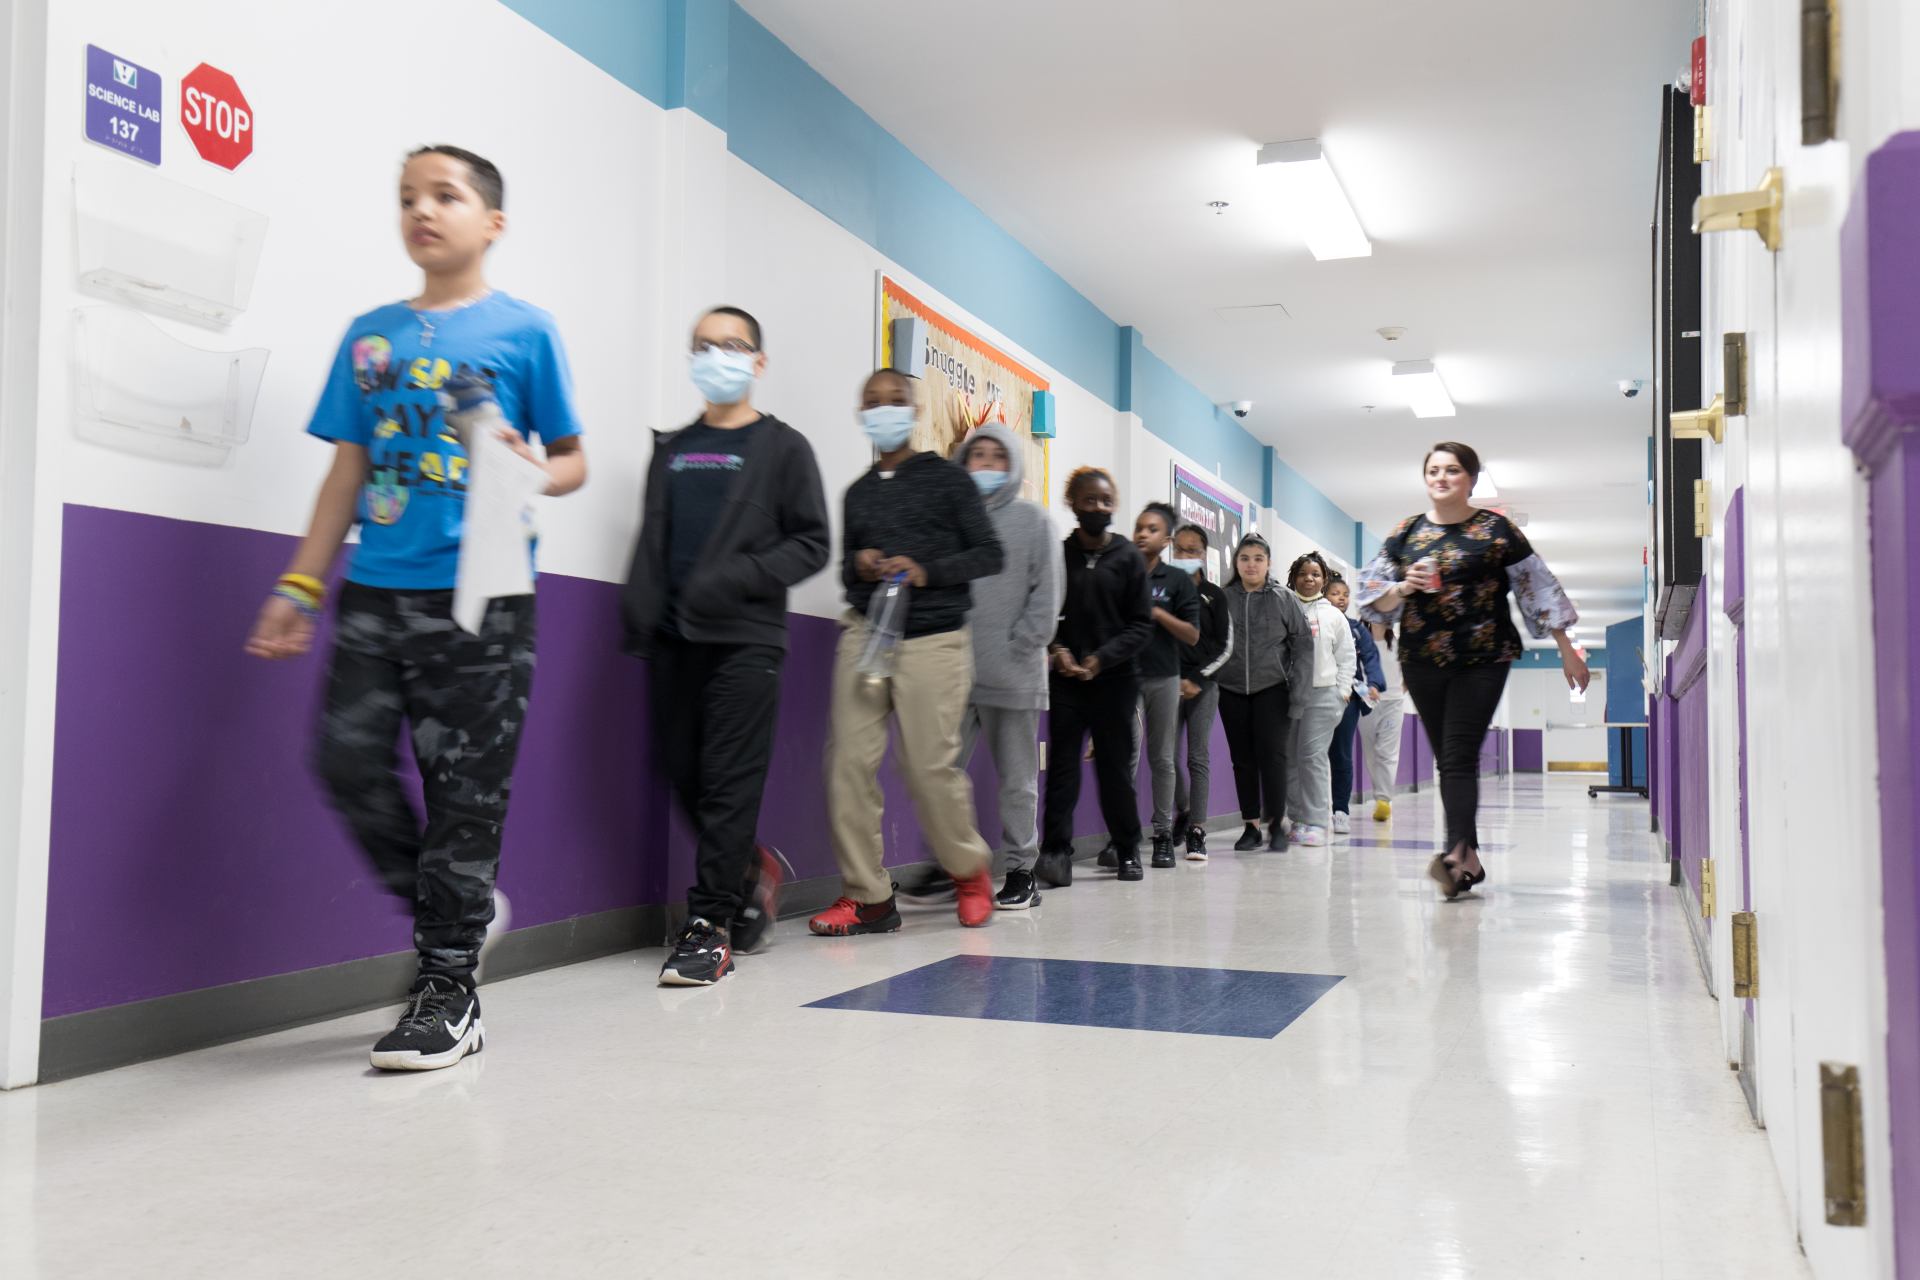 Students walking through the hallways